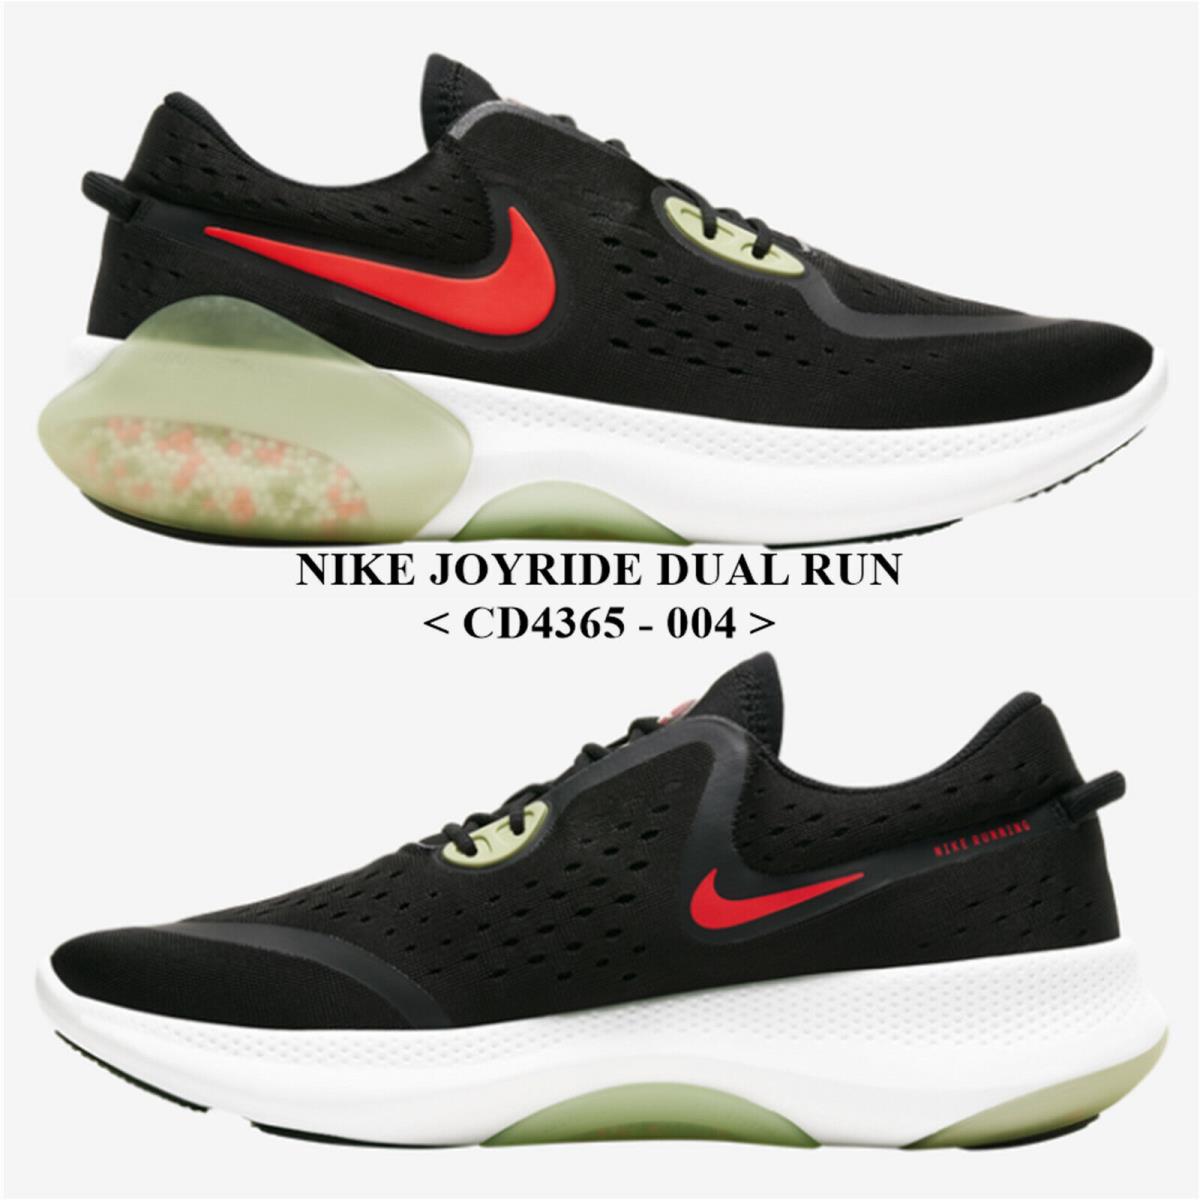 Nike Joyride Dual Run <CD4365 - 004> Men`s Running Shoes with Box - BLACK / BLACK-LASER CRIMSON , BLACK / BLACK-LASER CRIMSON Manufacturer